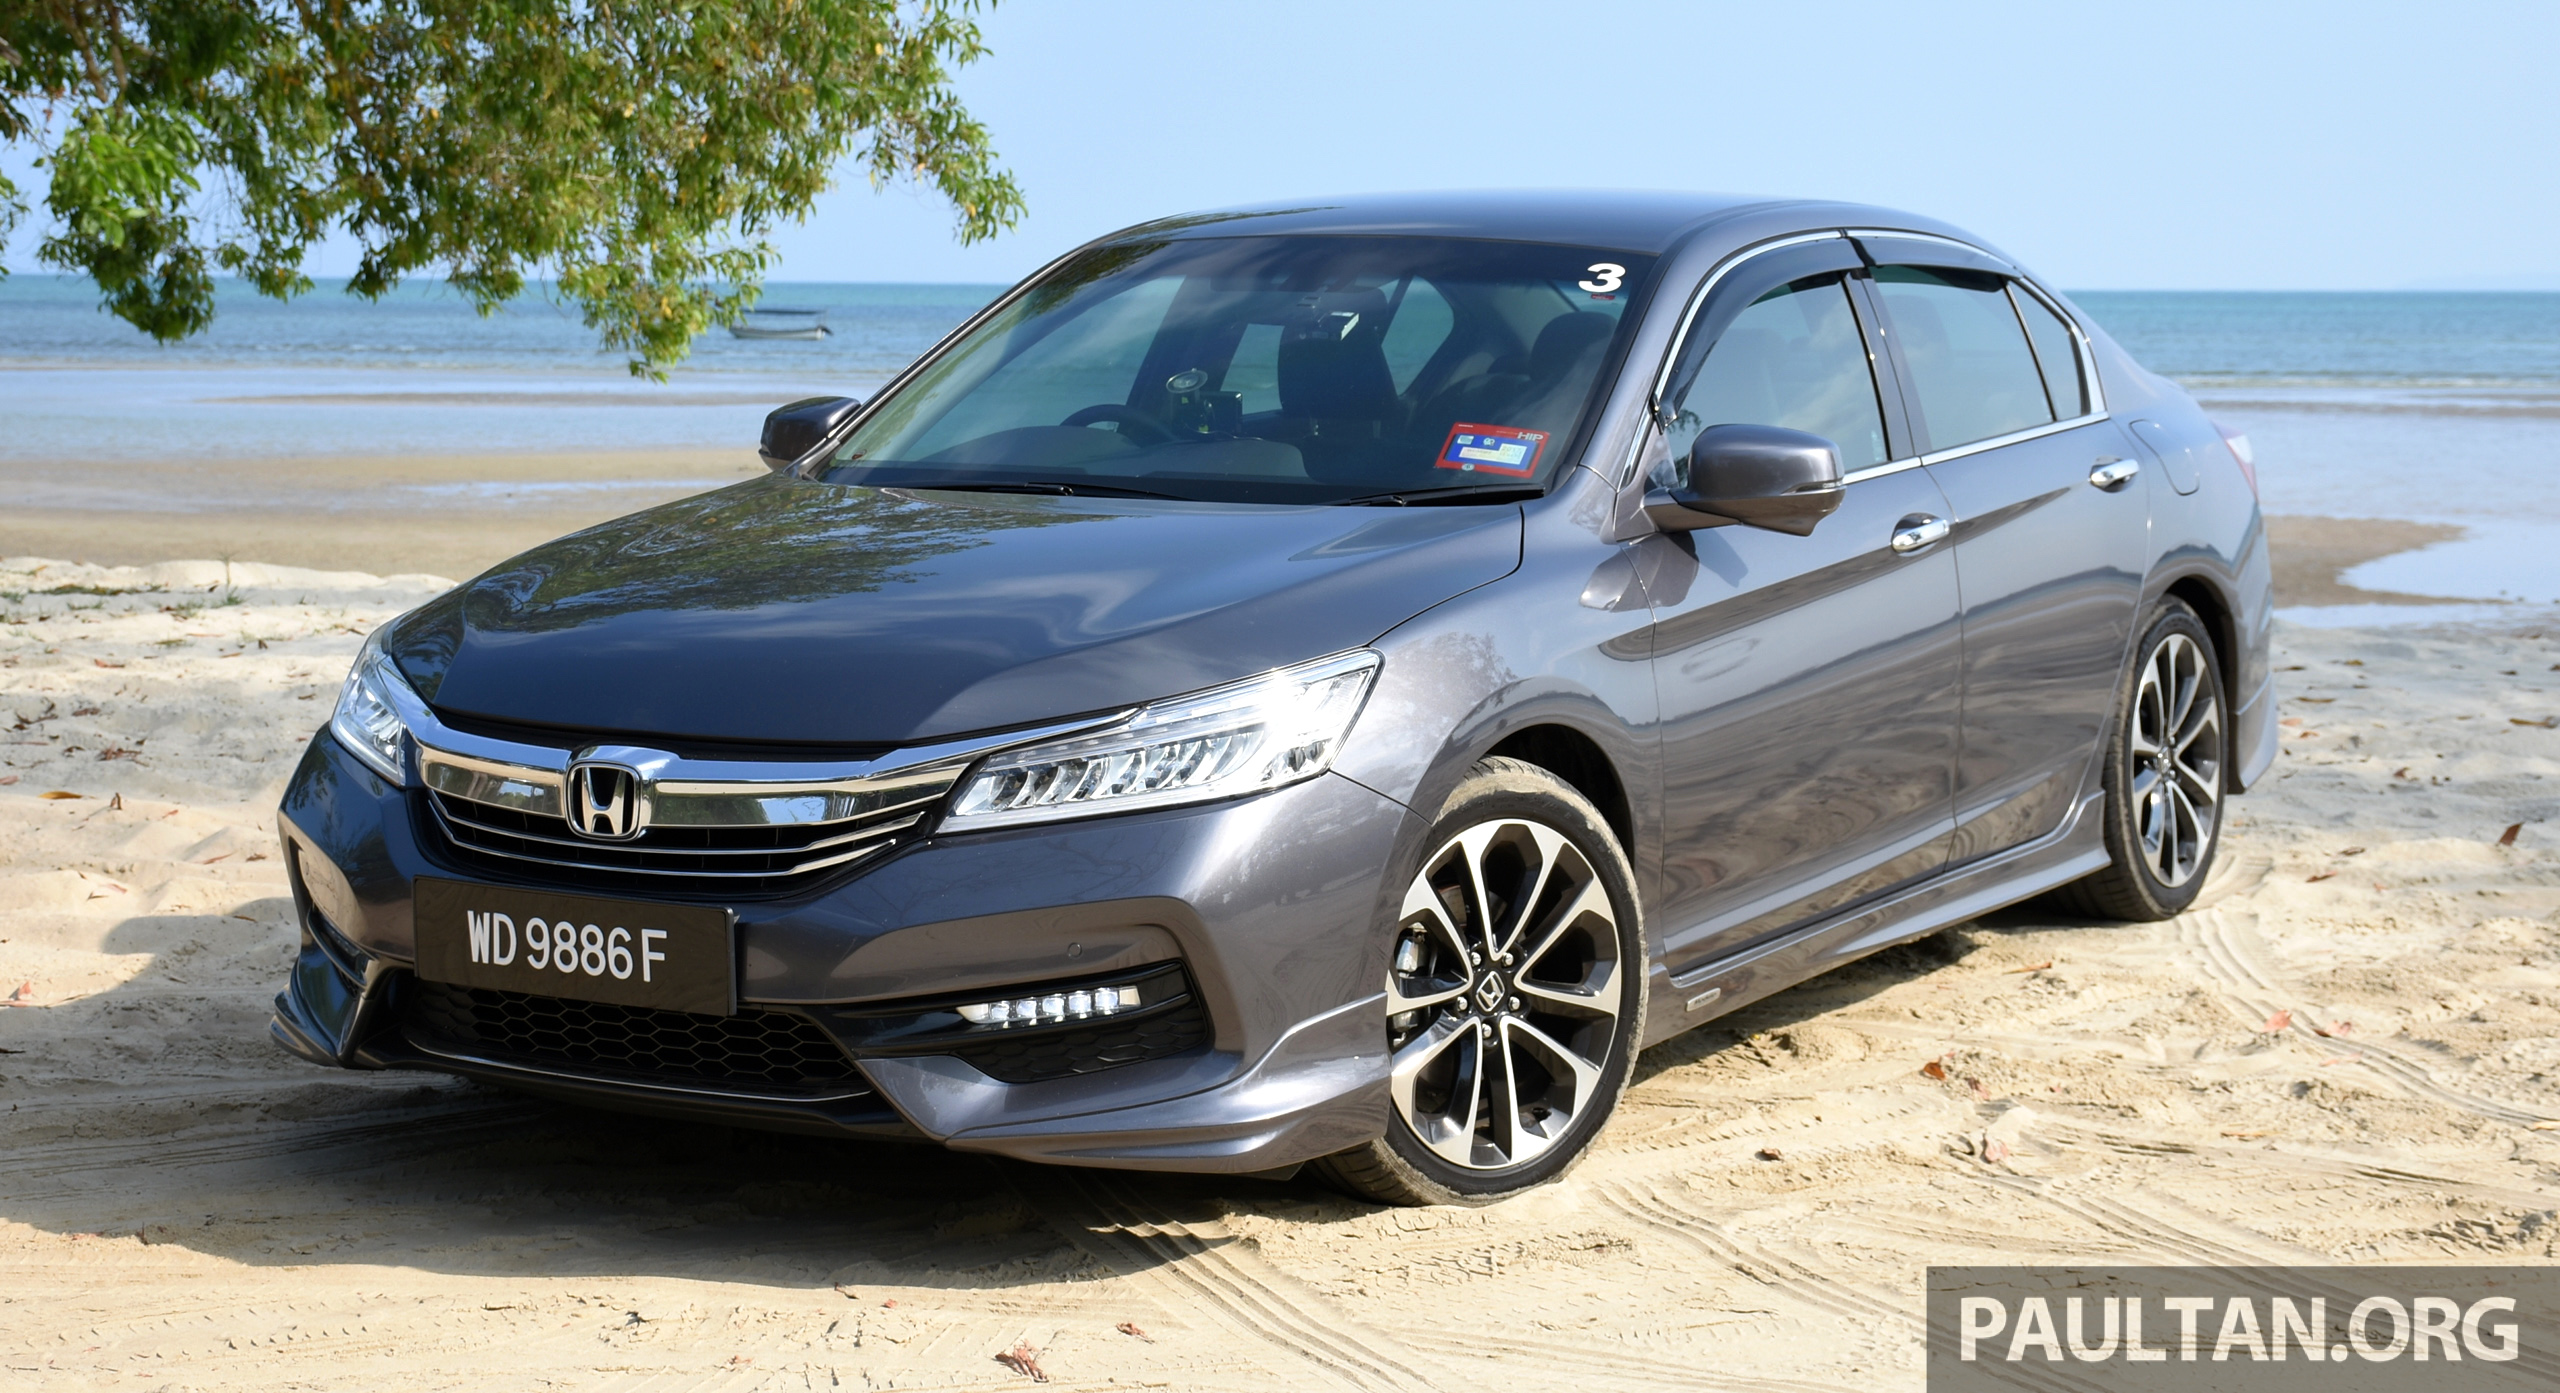 DRIVEN Honda Accord 2.4 VTiL facelift review adding